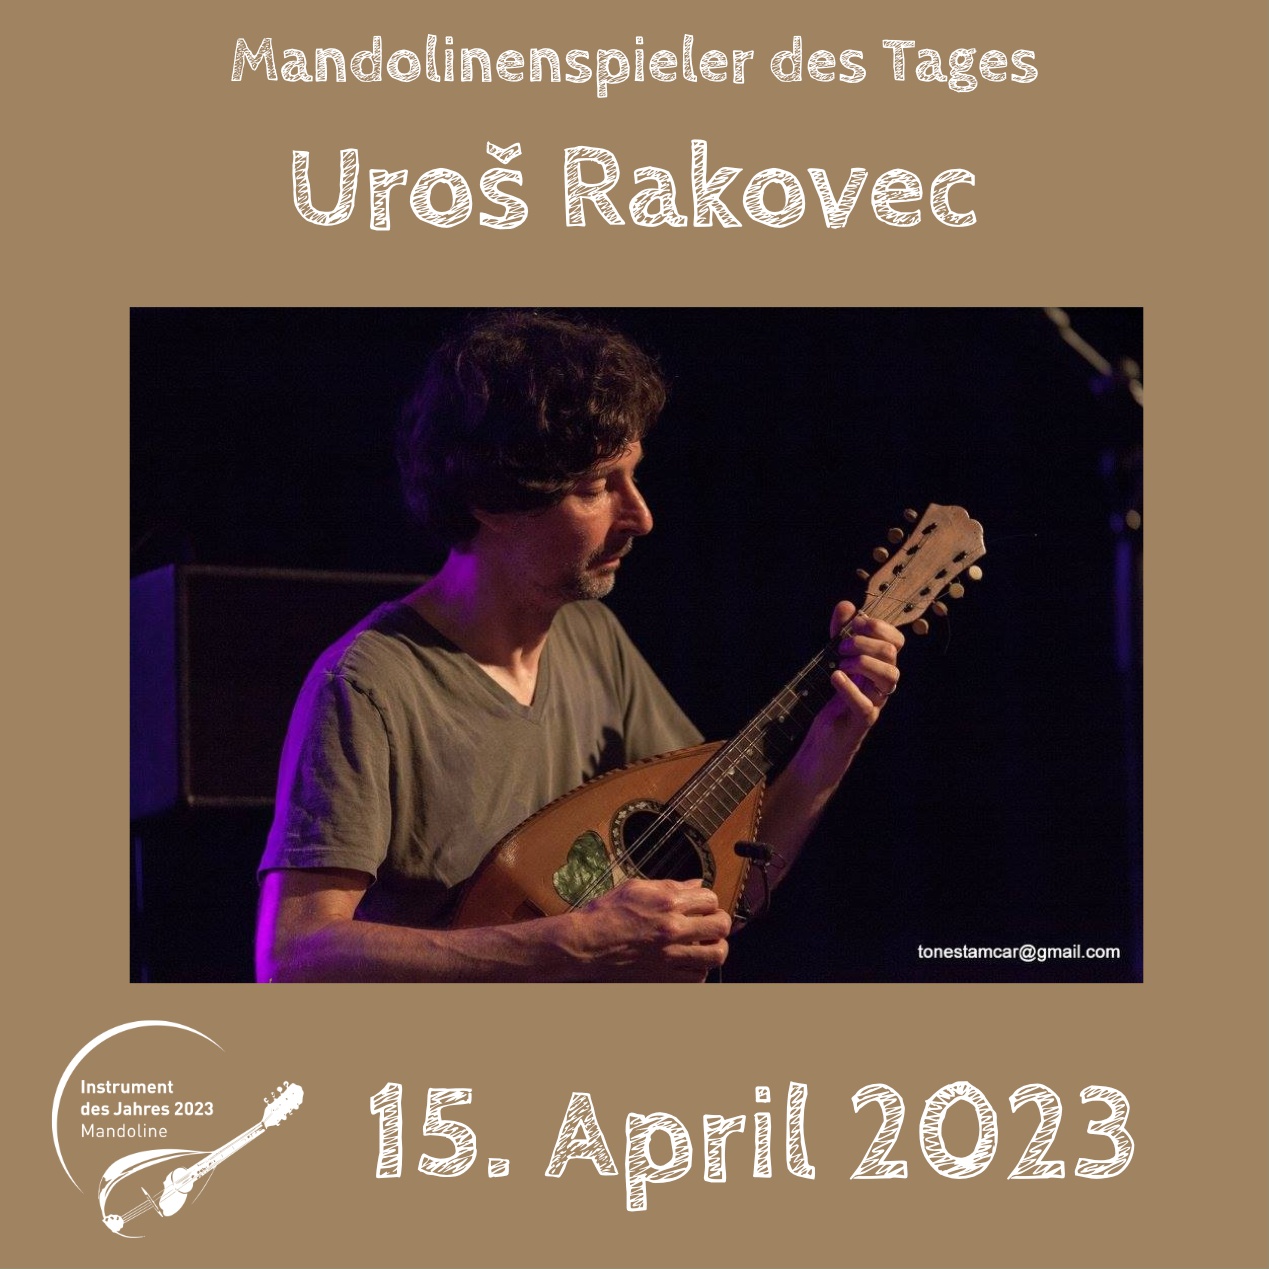 Uroš Rakovec Instrument des Jahres 2023 Mandolinenspieler Mandolinenspielerin des Tages